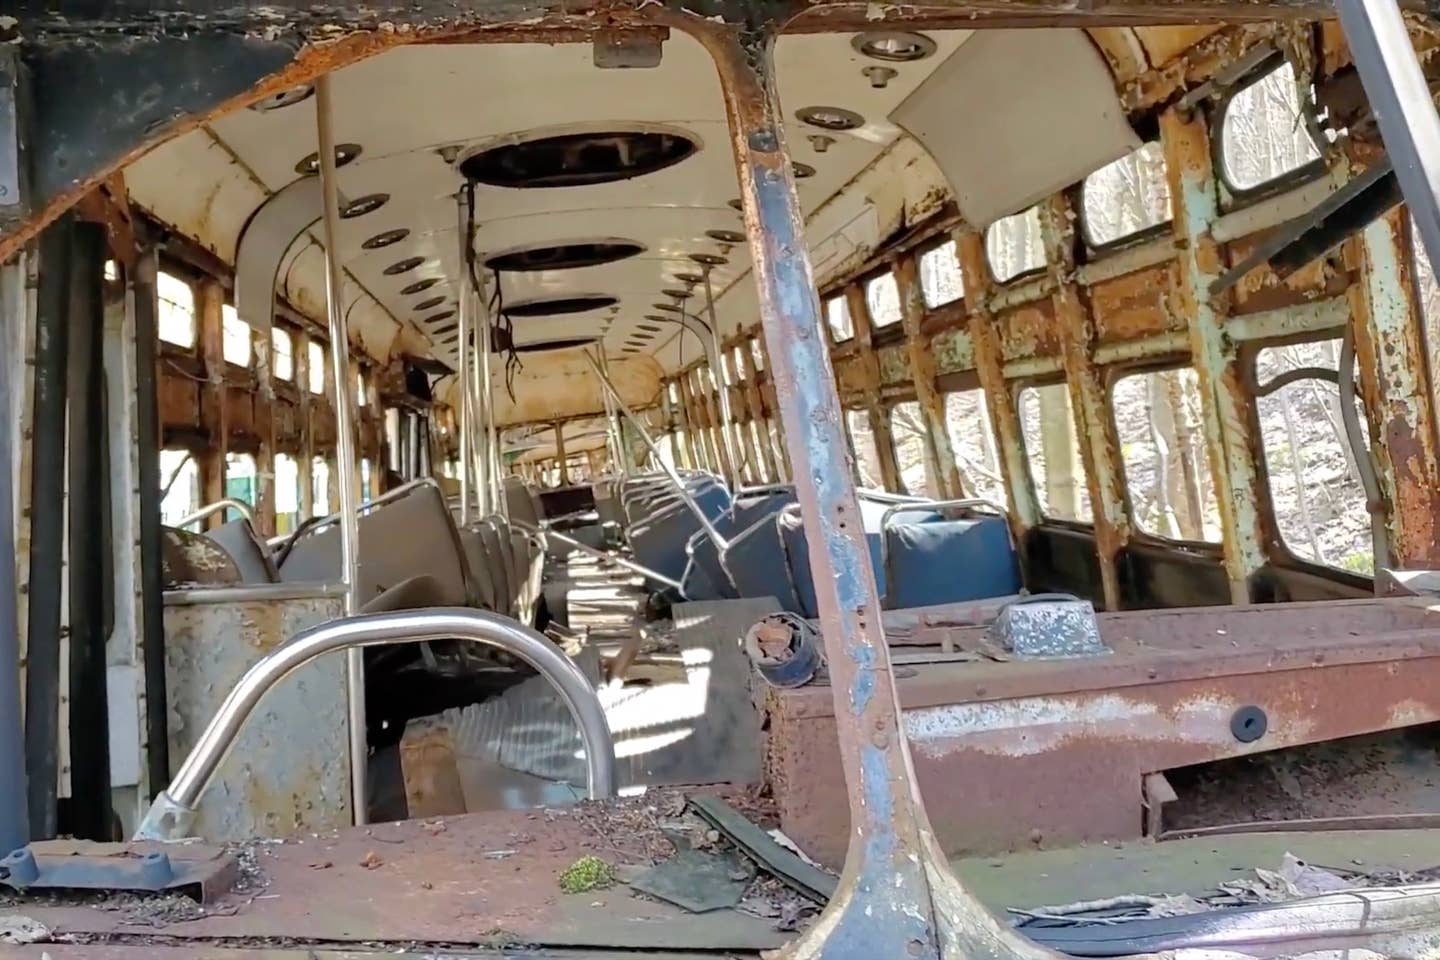 Inside a decrepit trolley at the Vintage Electric Streetcar Company. <em>YouTube, JOEY_UNDERGROUND</em>